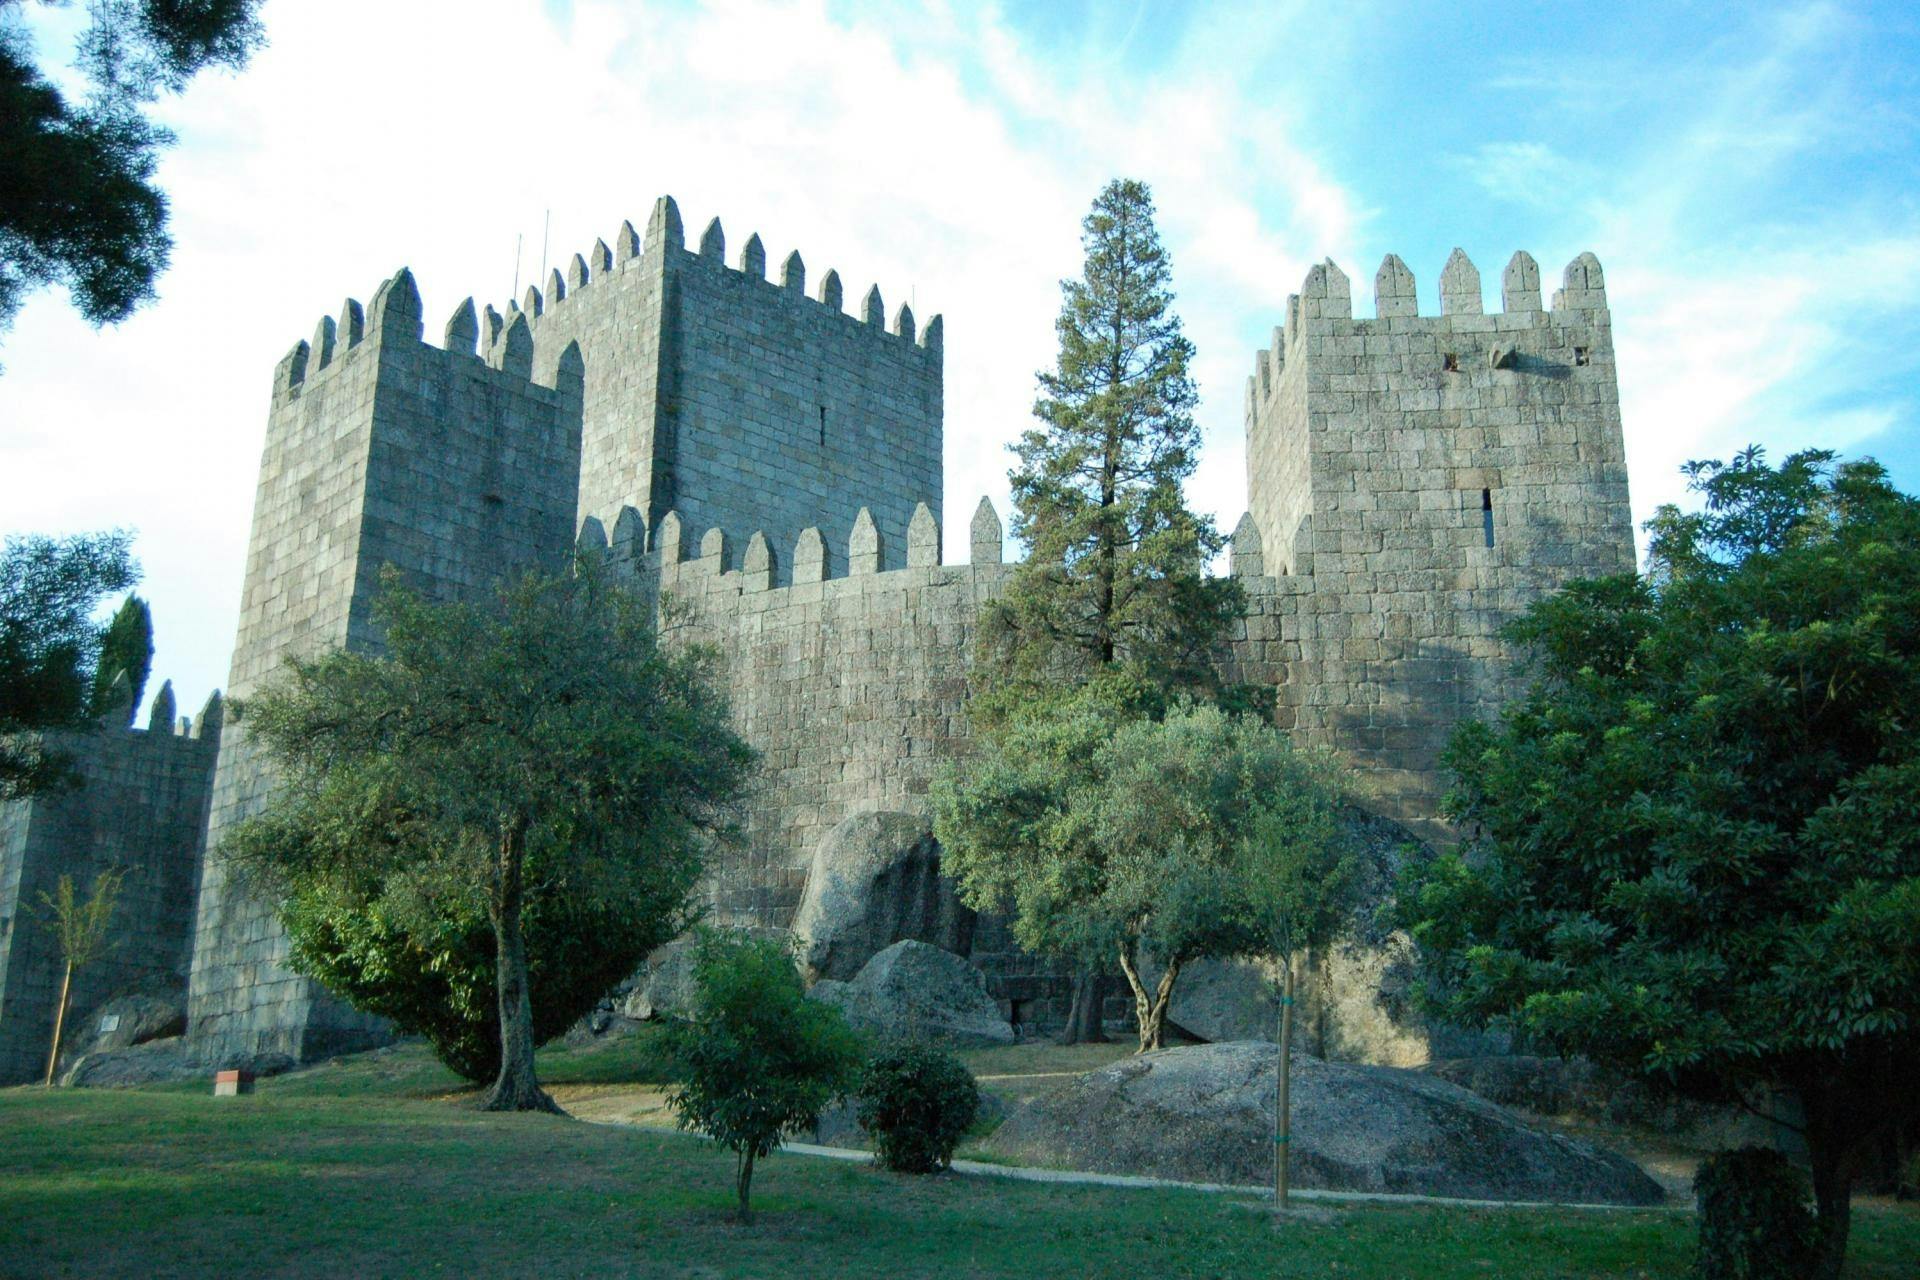 Get to know the impressive Guimarães Castle!